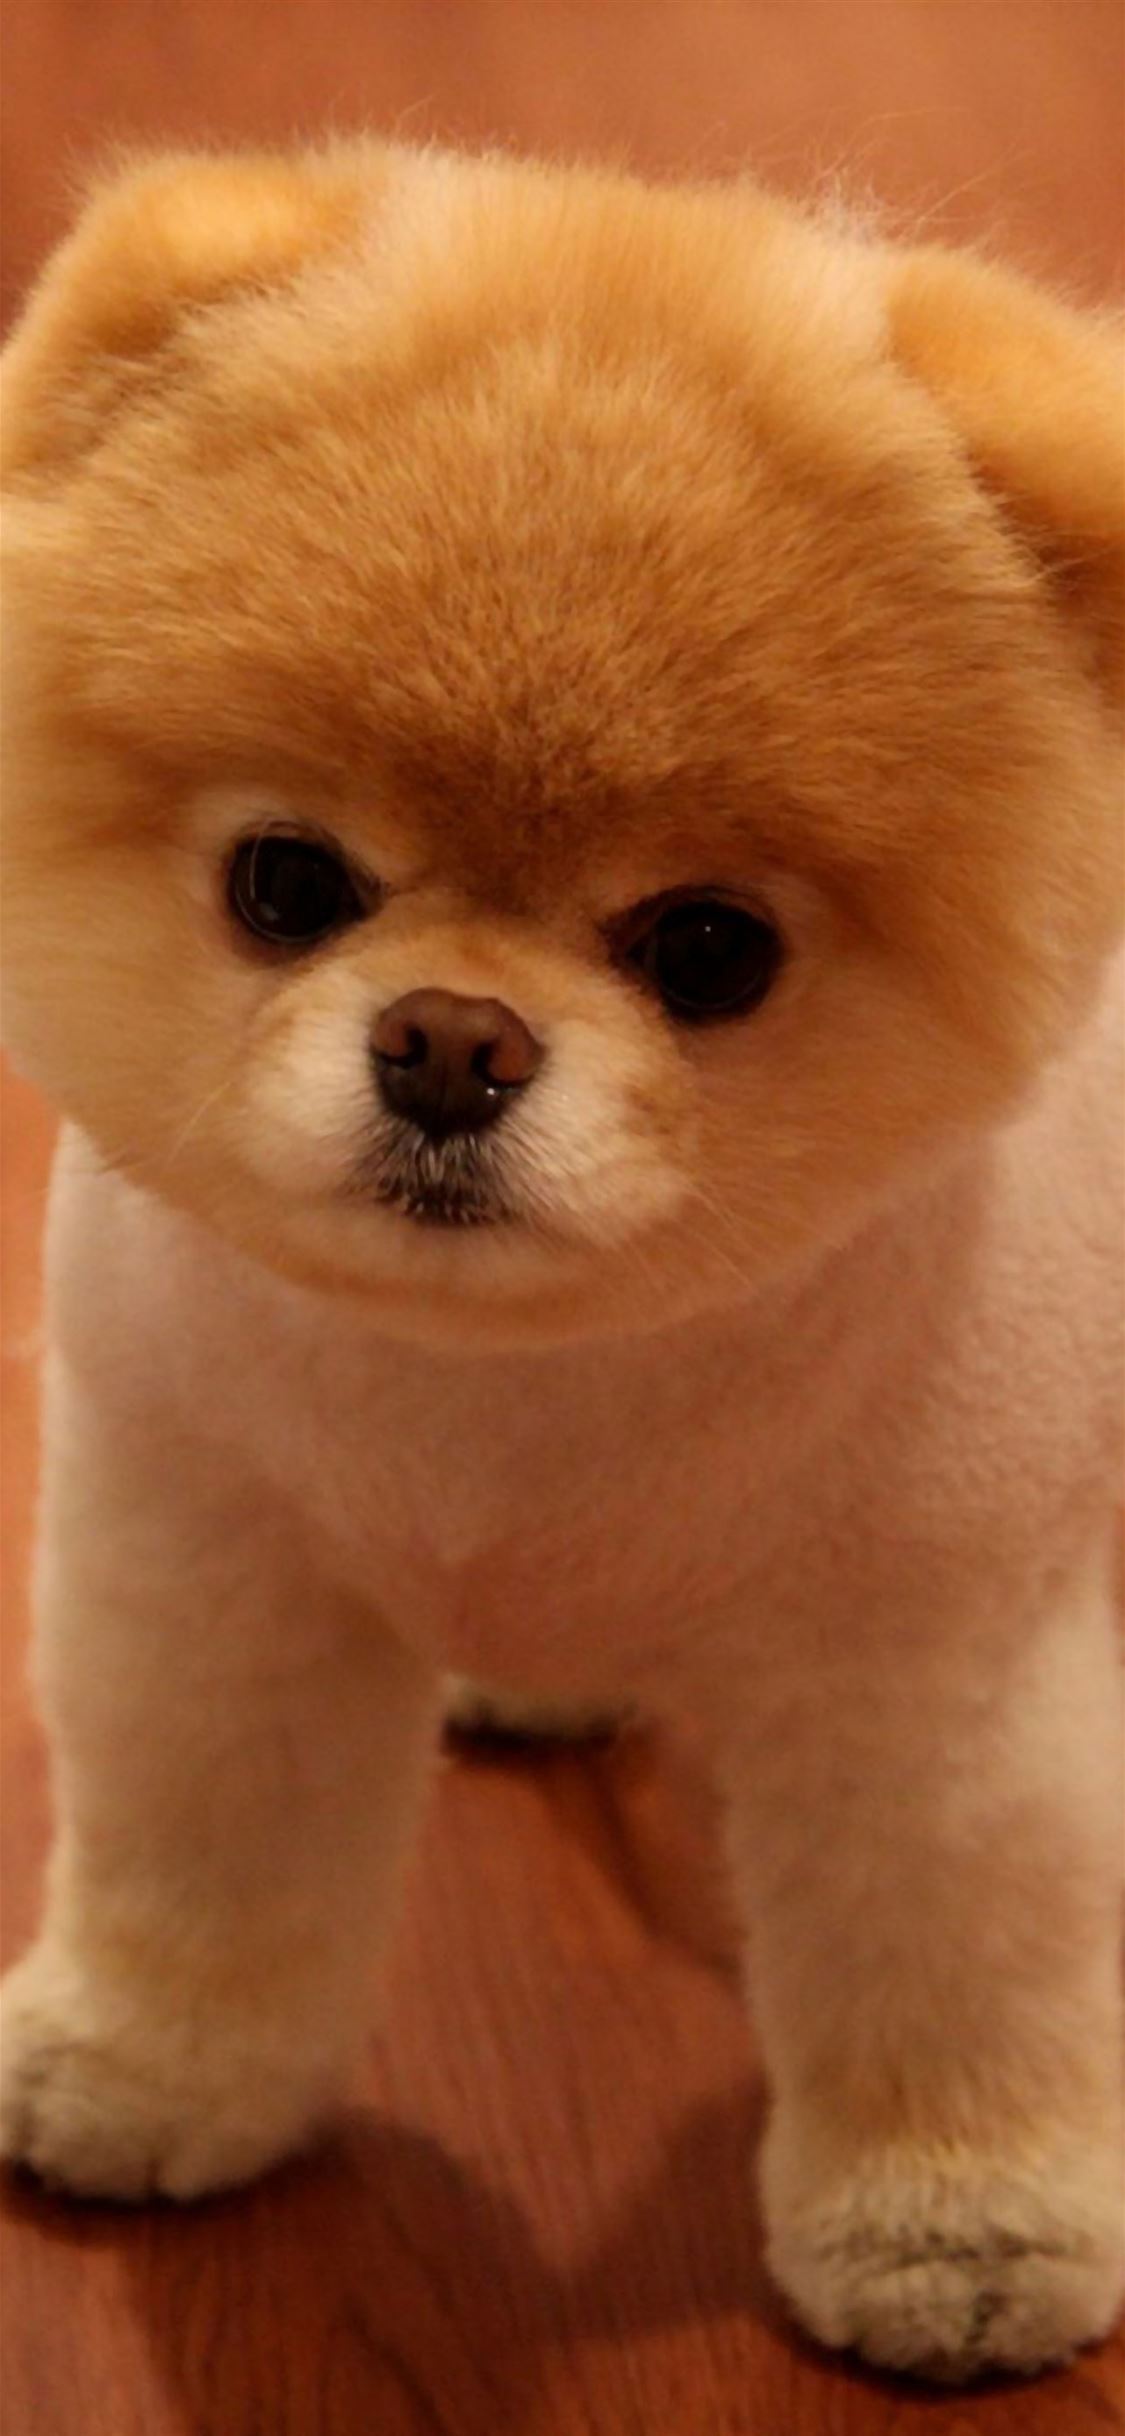 Cute Pomeranian Dog iPhone wallpaper 